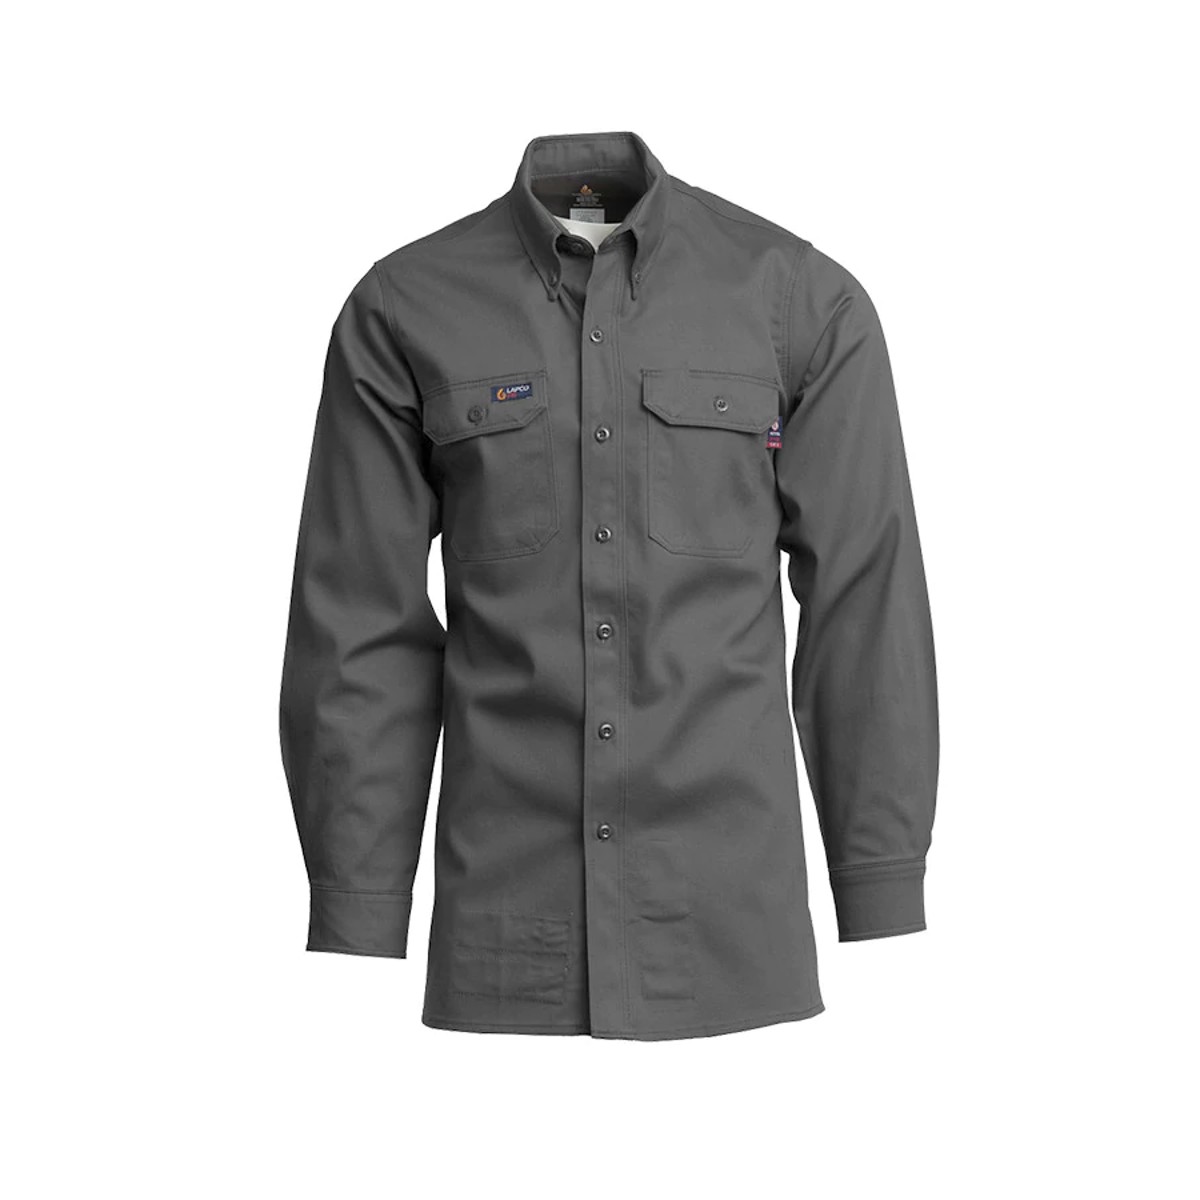 LAPCO FR Uniform Shirt in Gray